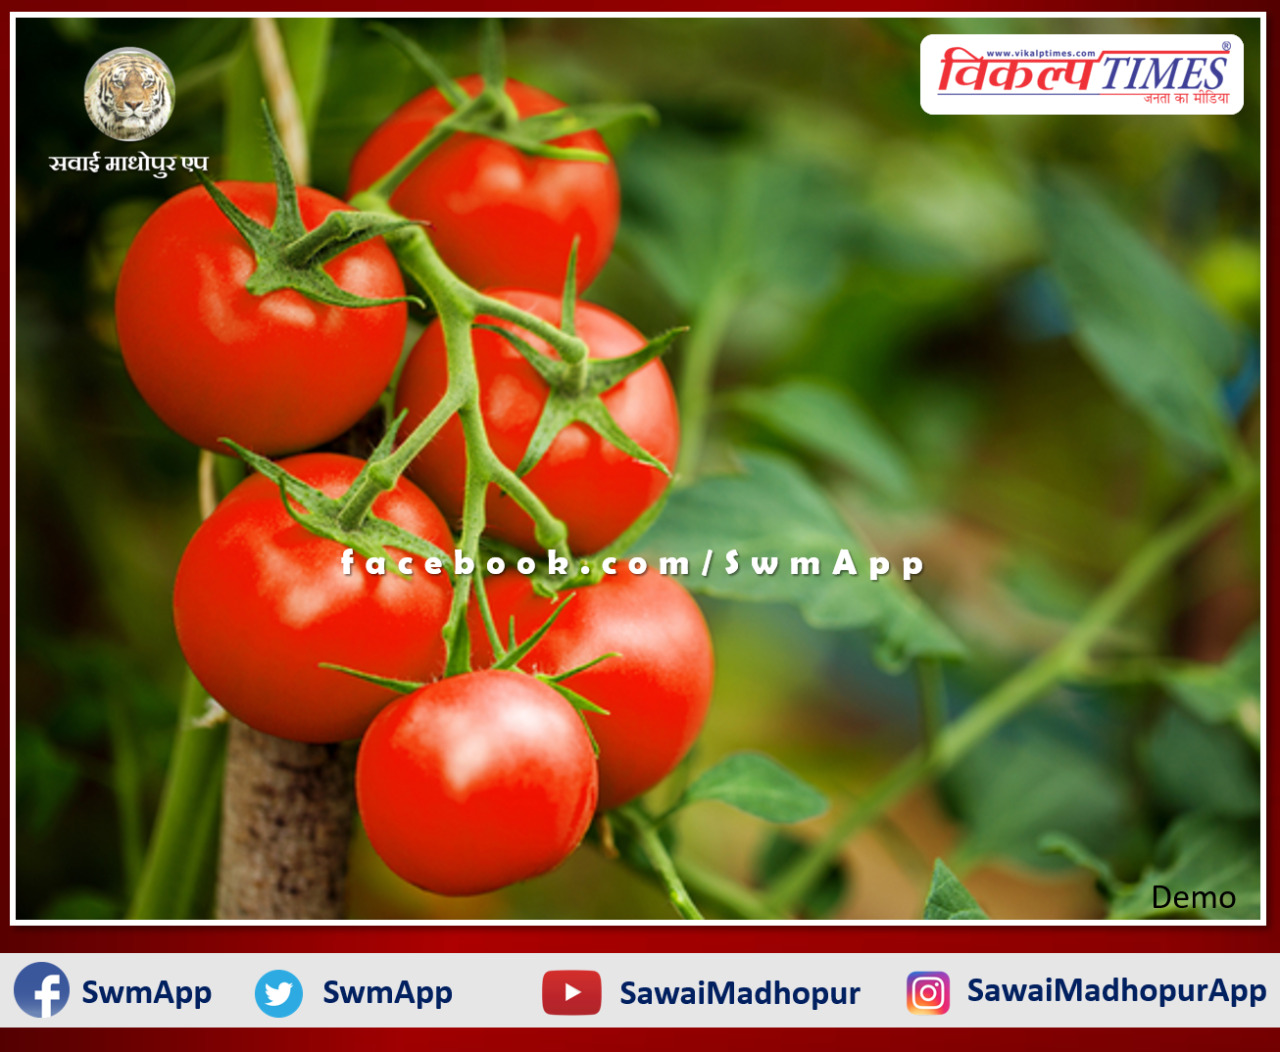 sawai madhopur news Crop insurance for tomato till 31st December